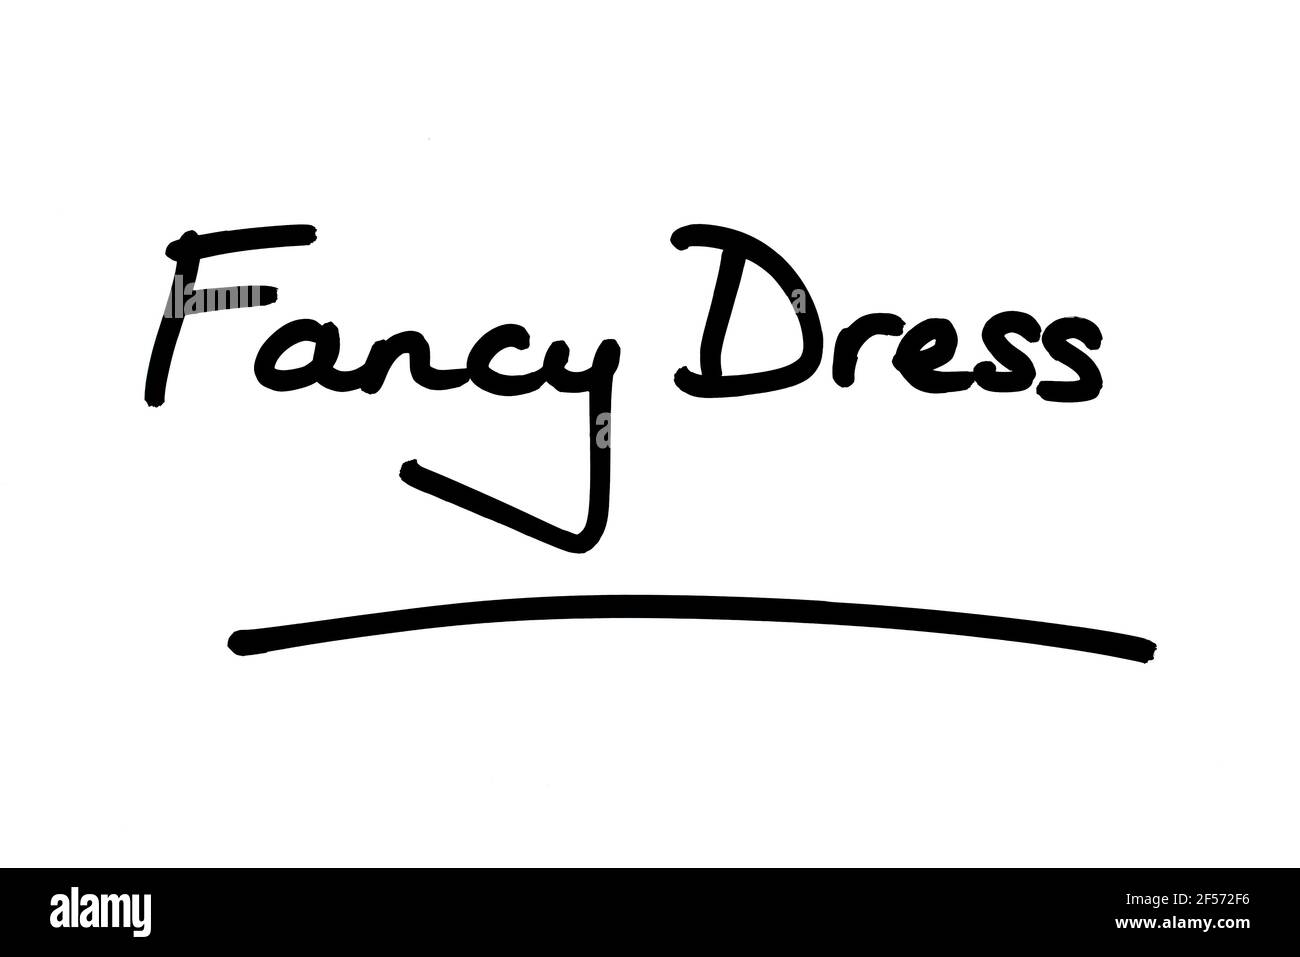 Fancy Dress, handwritten on a white background Stock Photo - Alamy